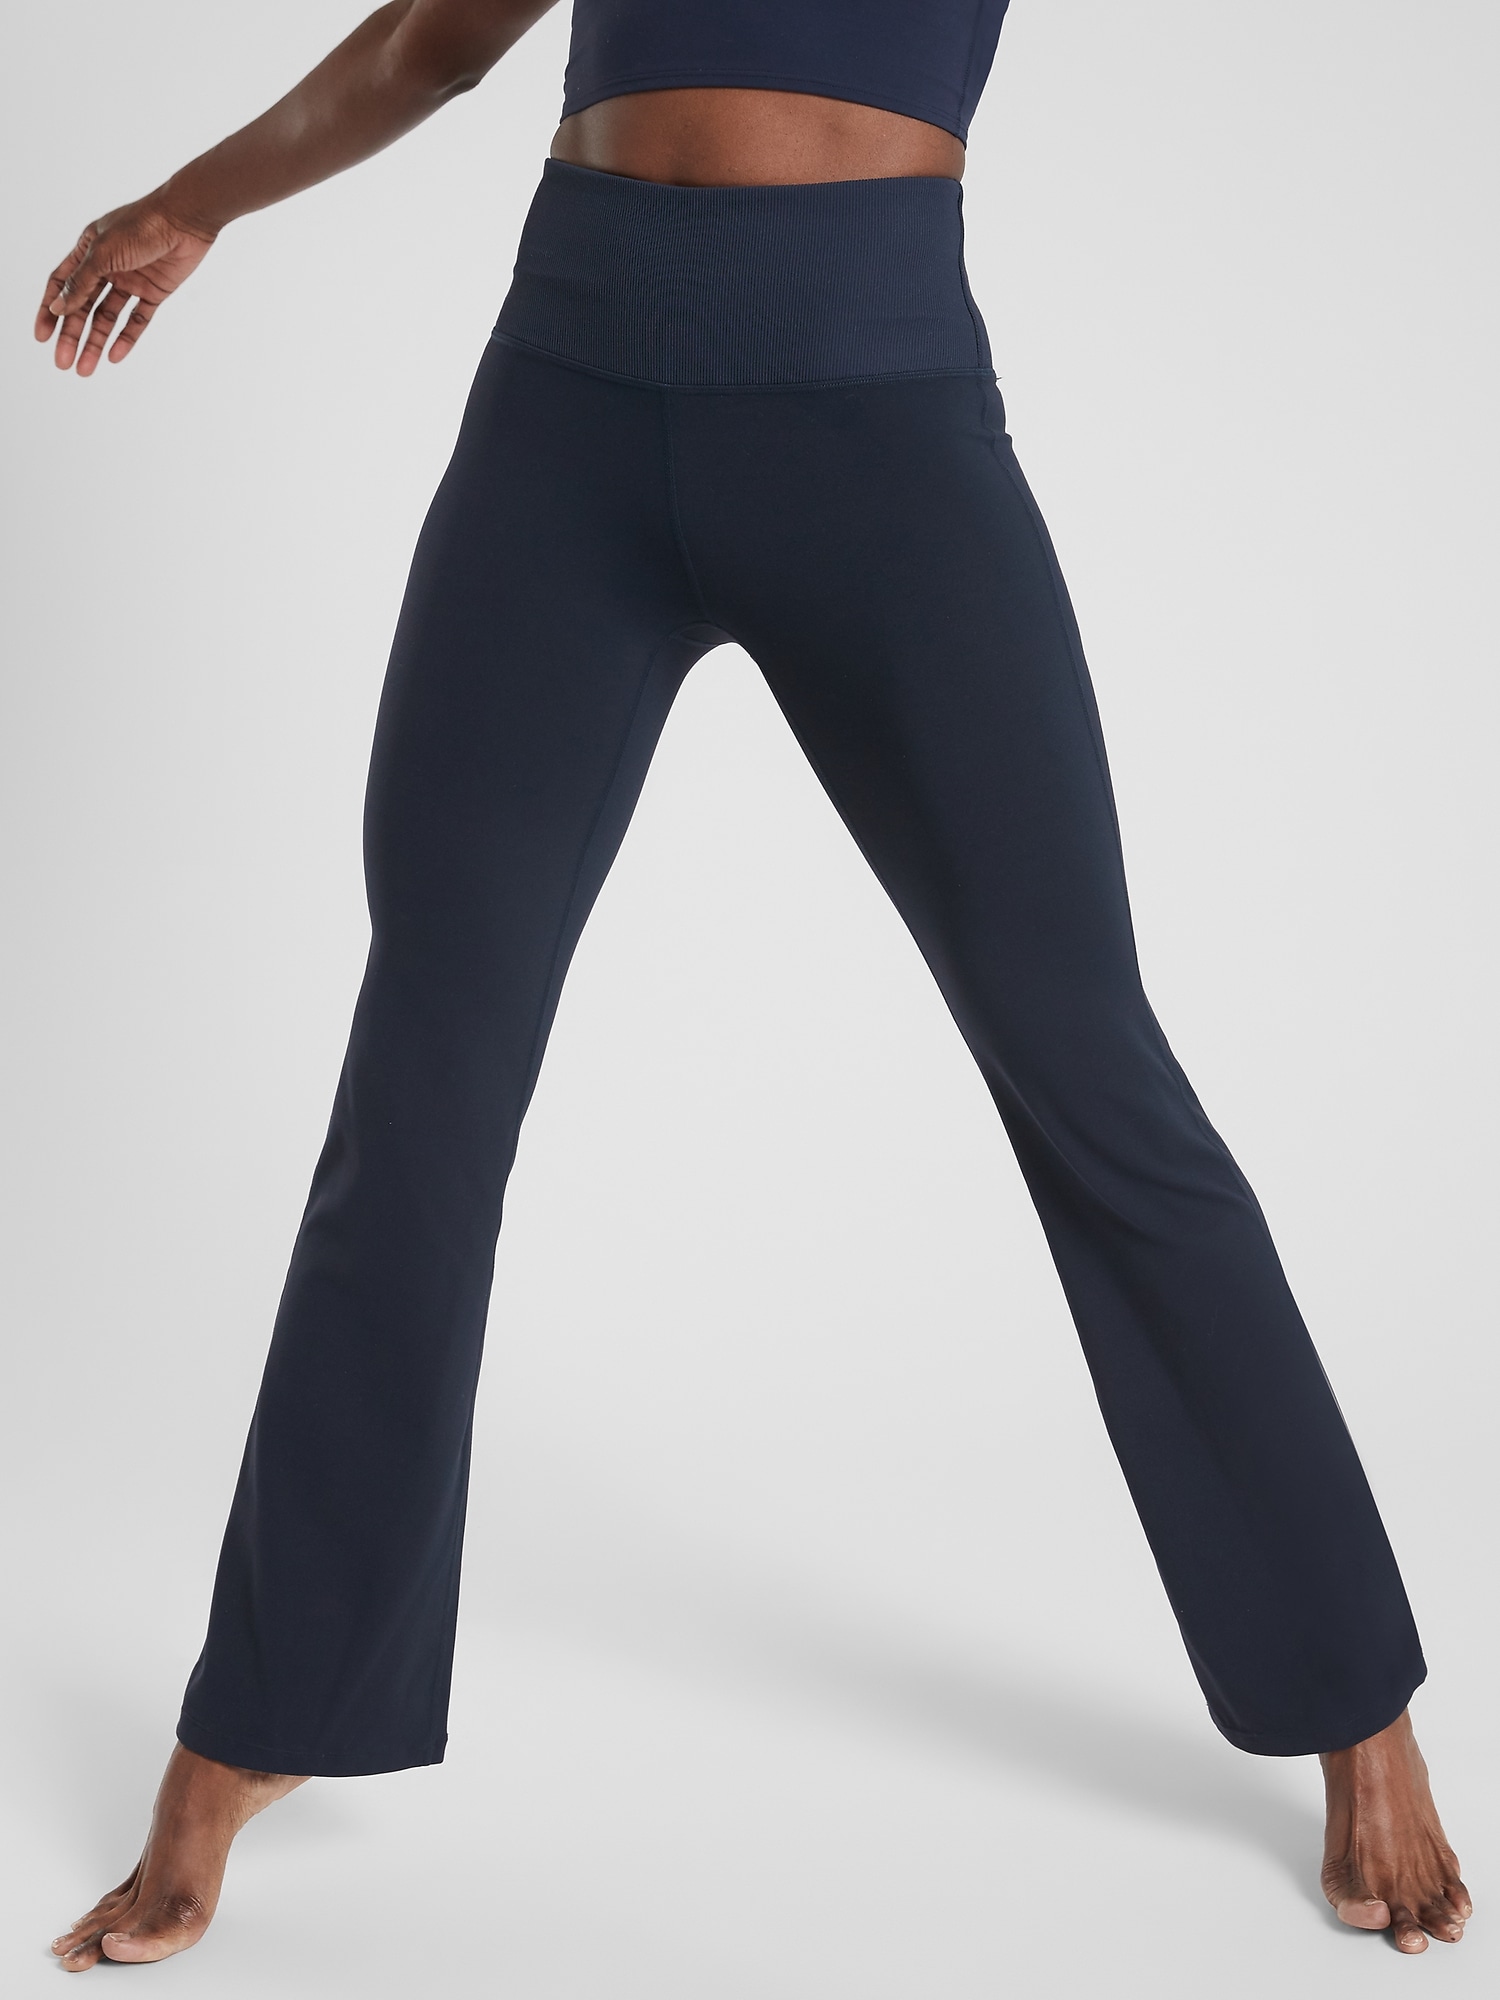 Viosi Yoga Pants for Women Bootcut Fold Over High Waisted Cotton